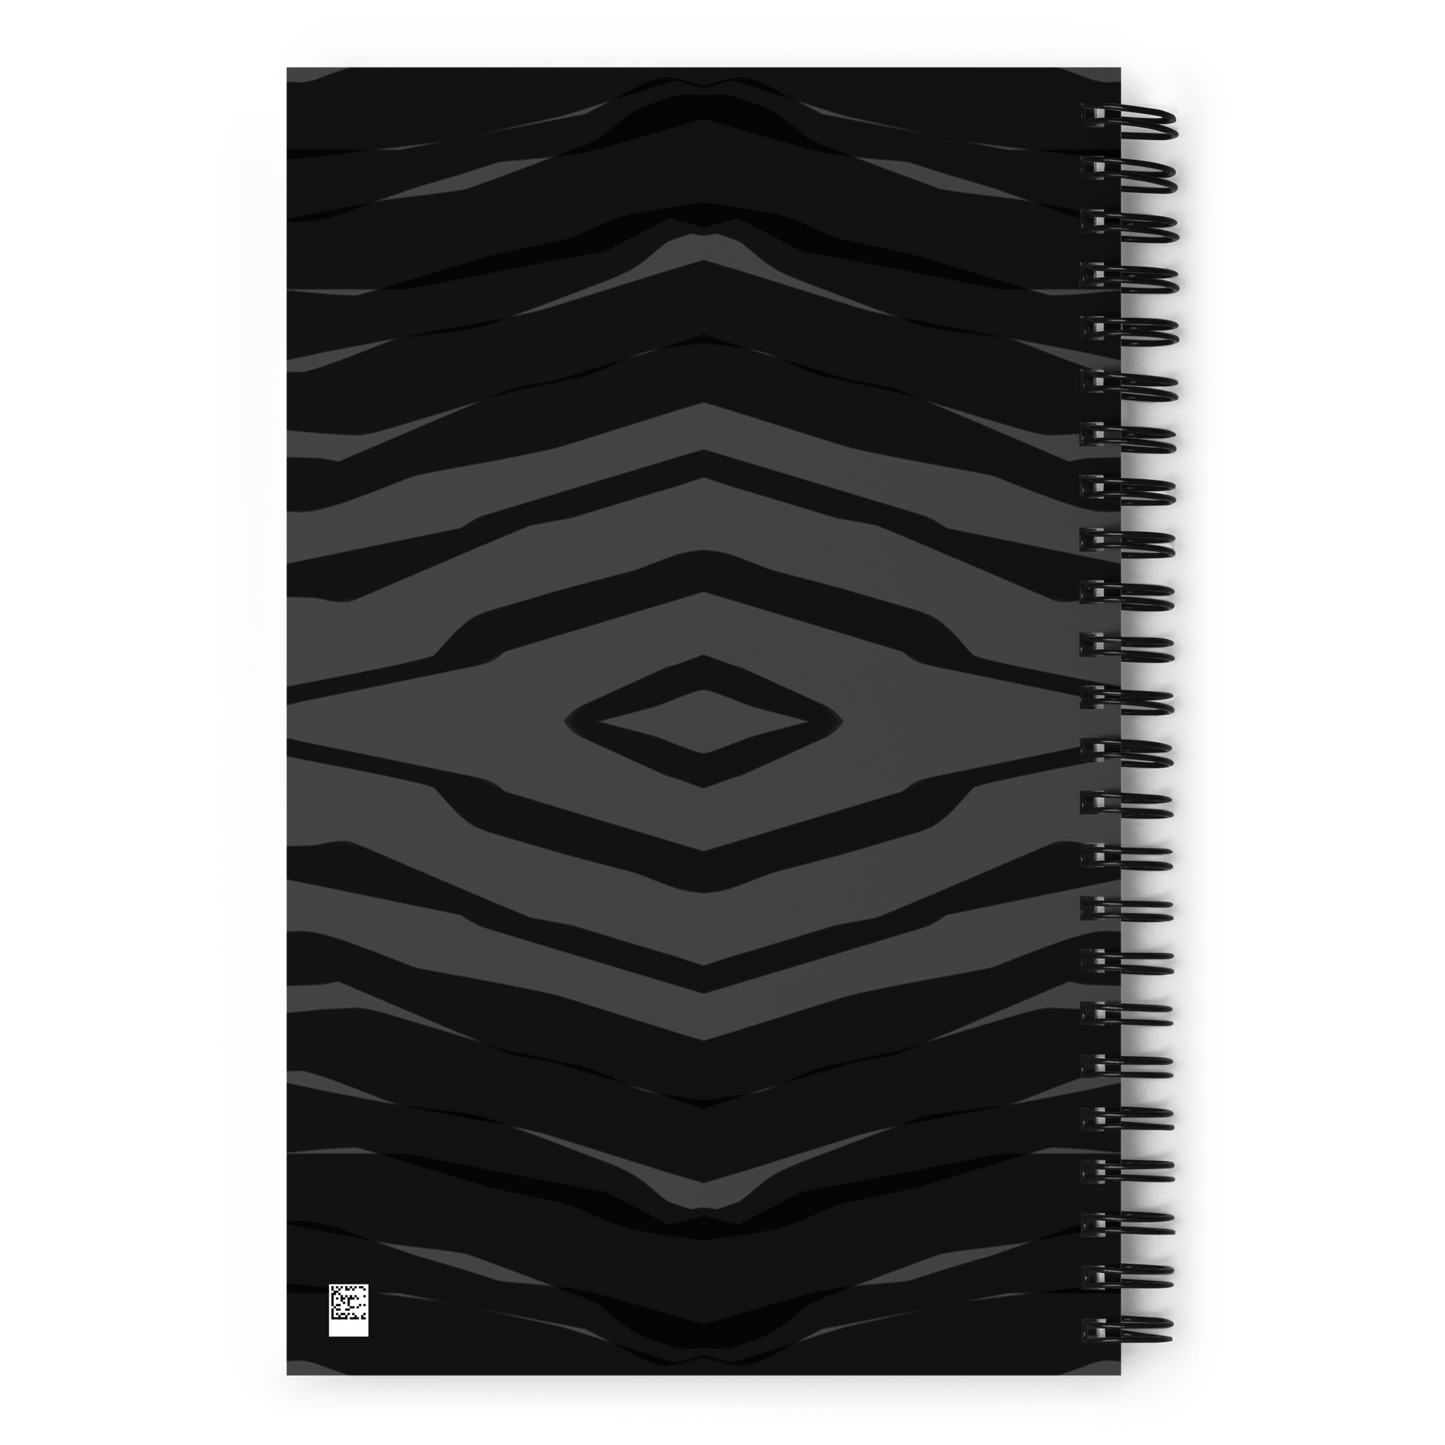 Black H Stripes BeSculpt Spiral Notebook 2